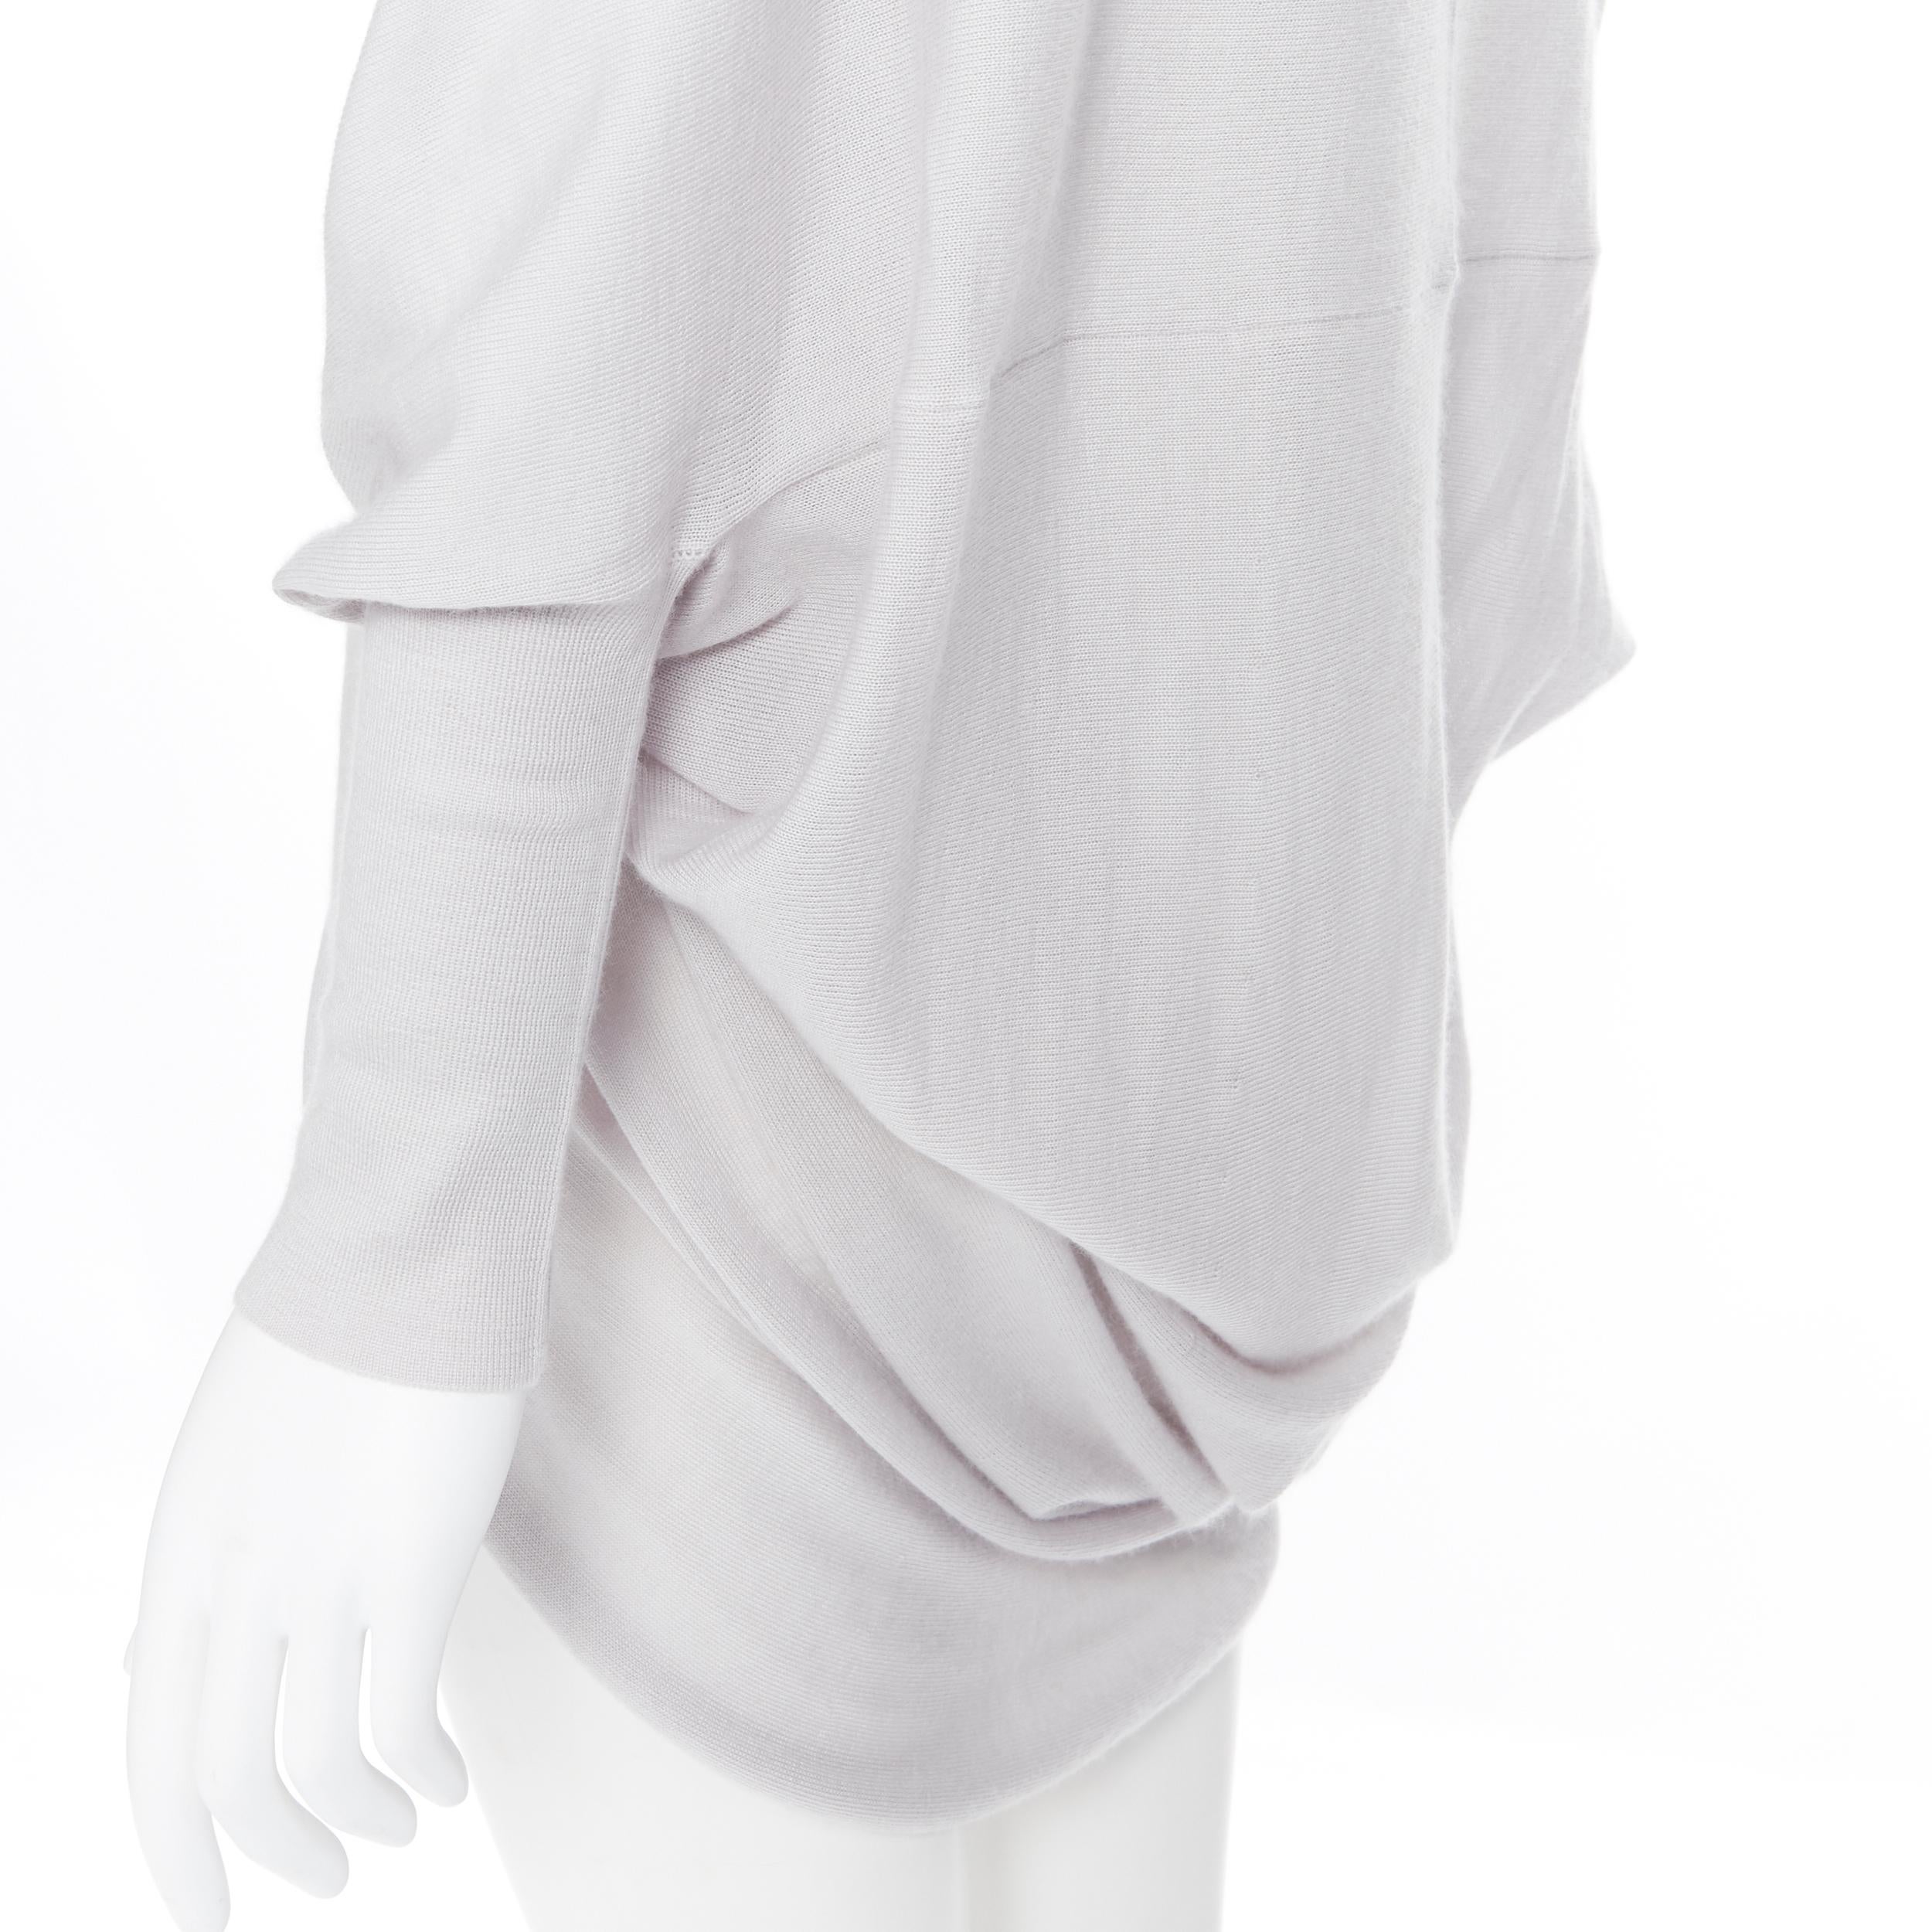 LANVIN 100% cashmere light grey bat sleeve button front draped shrug cardigan S 2